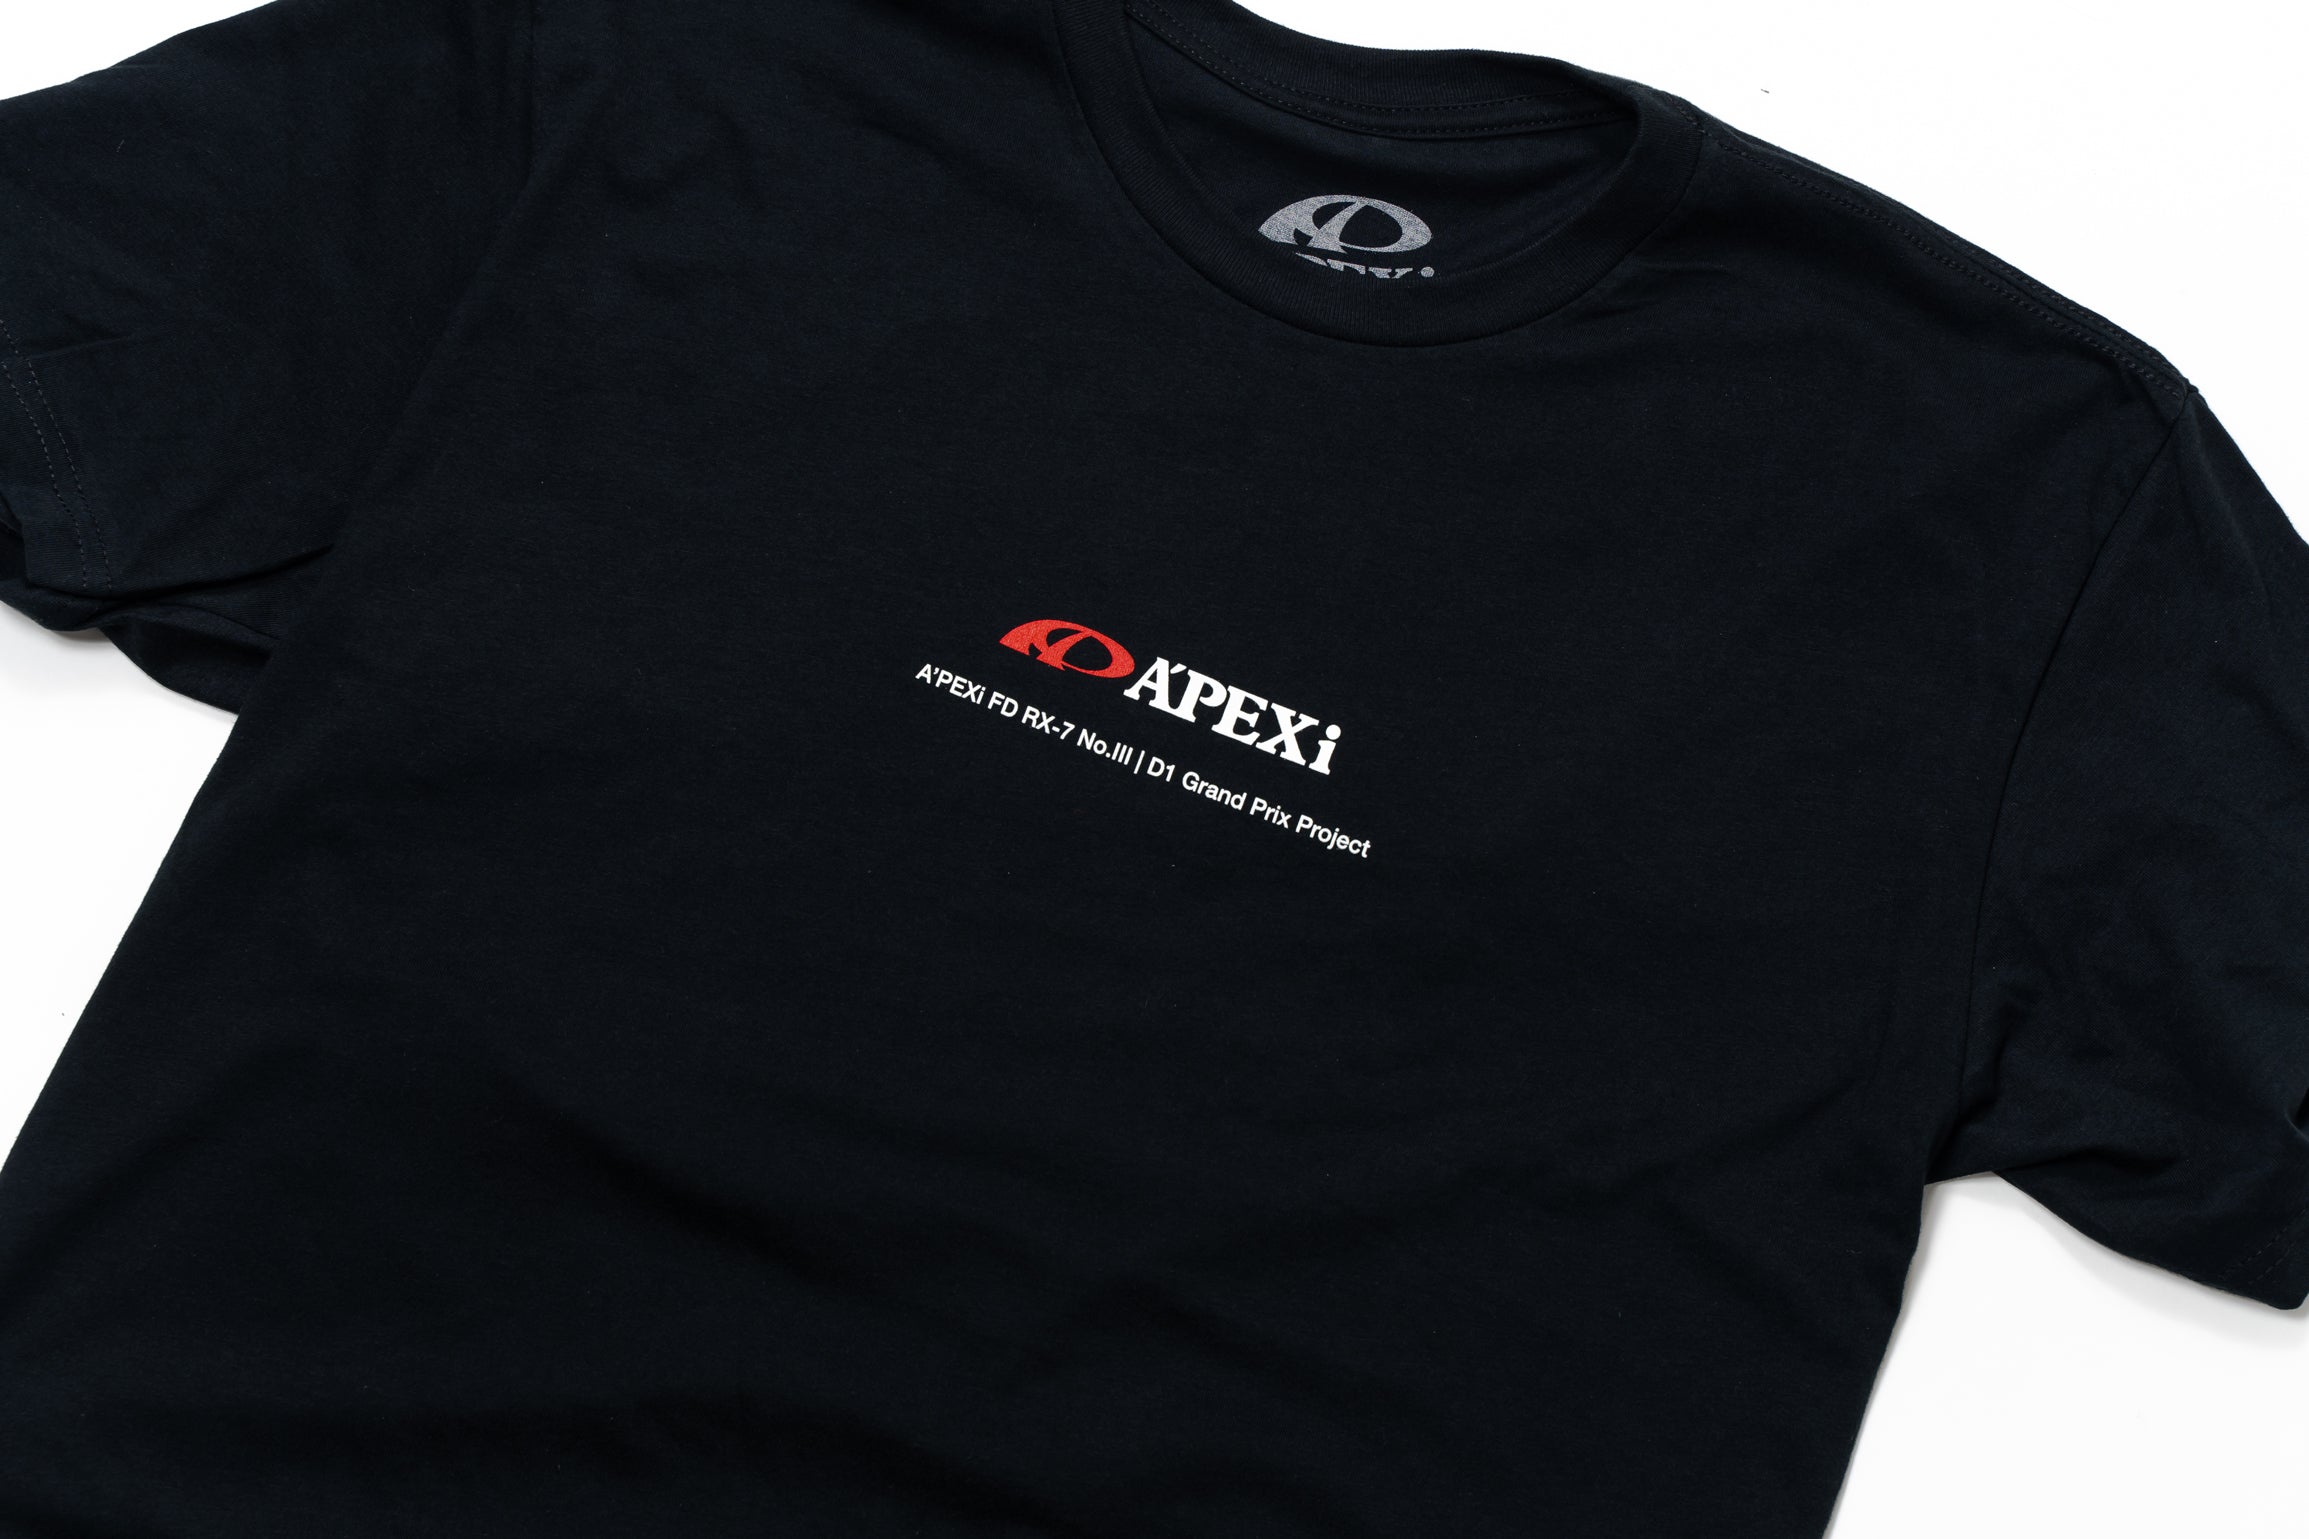 A'PEXi T-Shirt - FD RX-7 | D1 Grand Prix Project - Black (LIMITED EDITION)